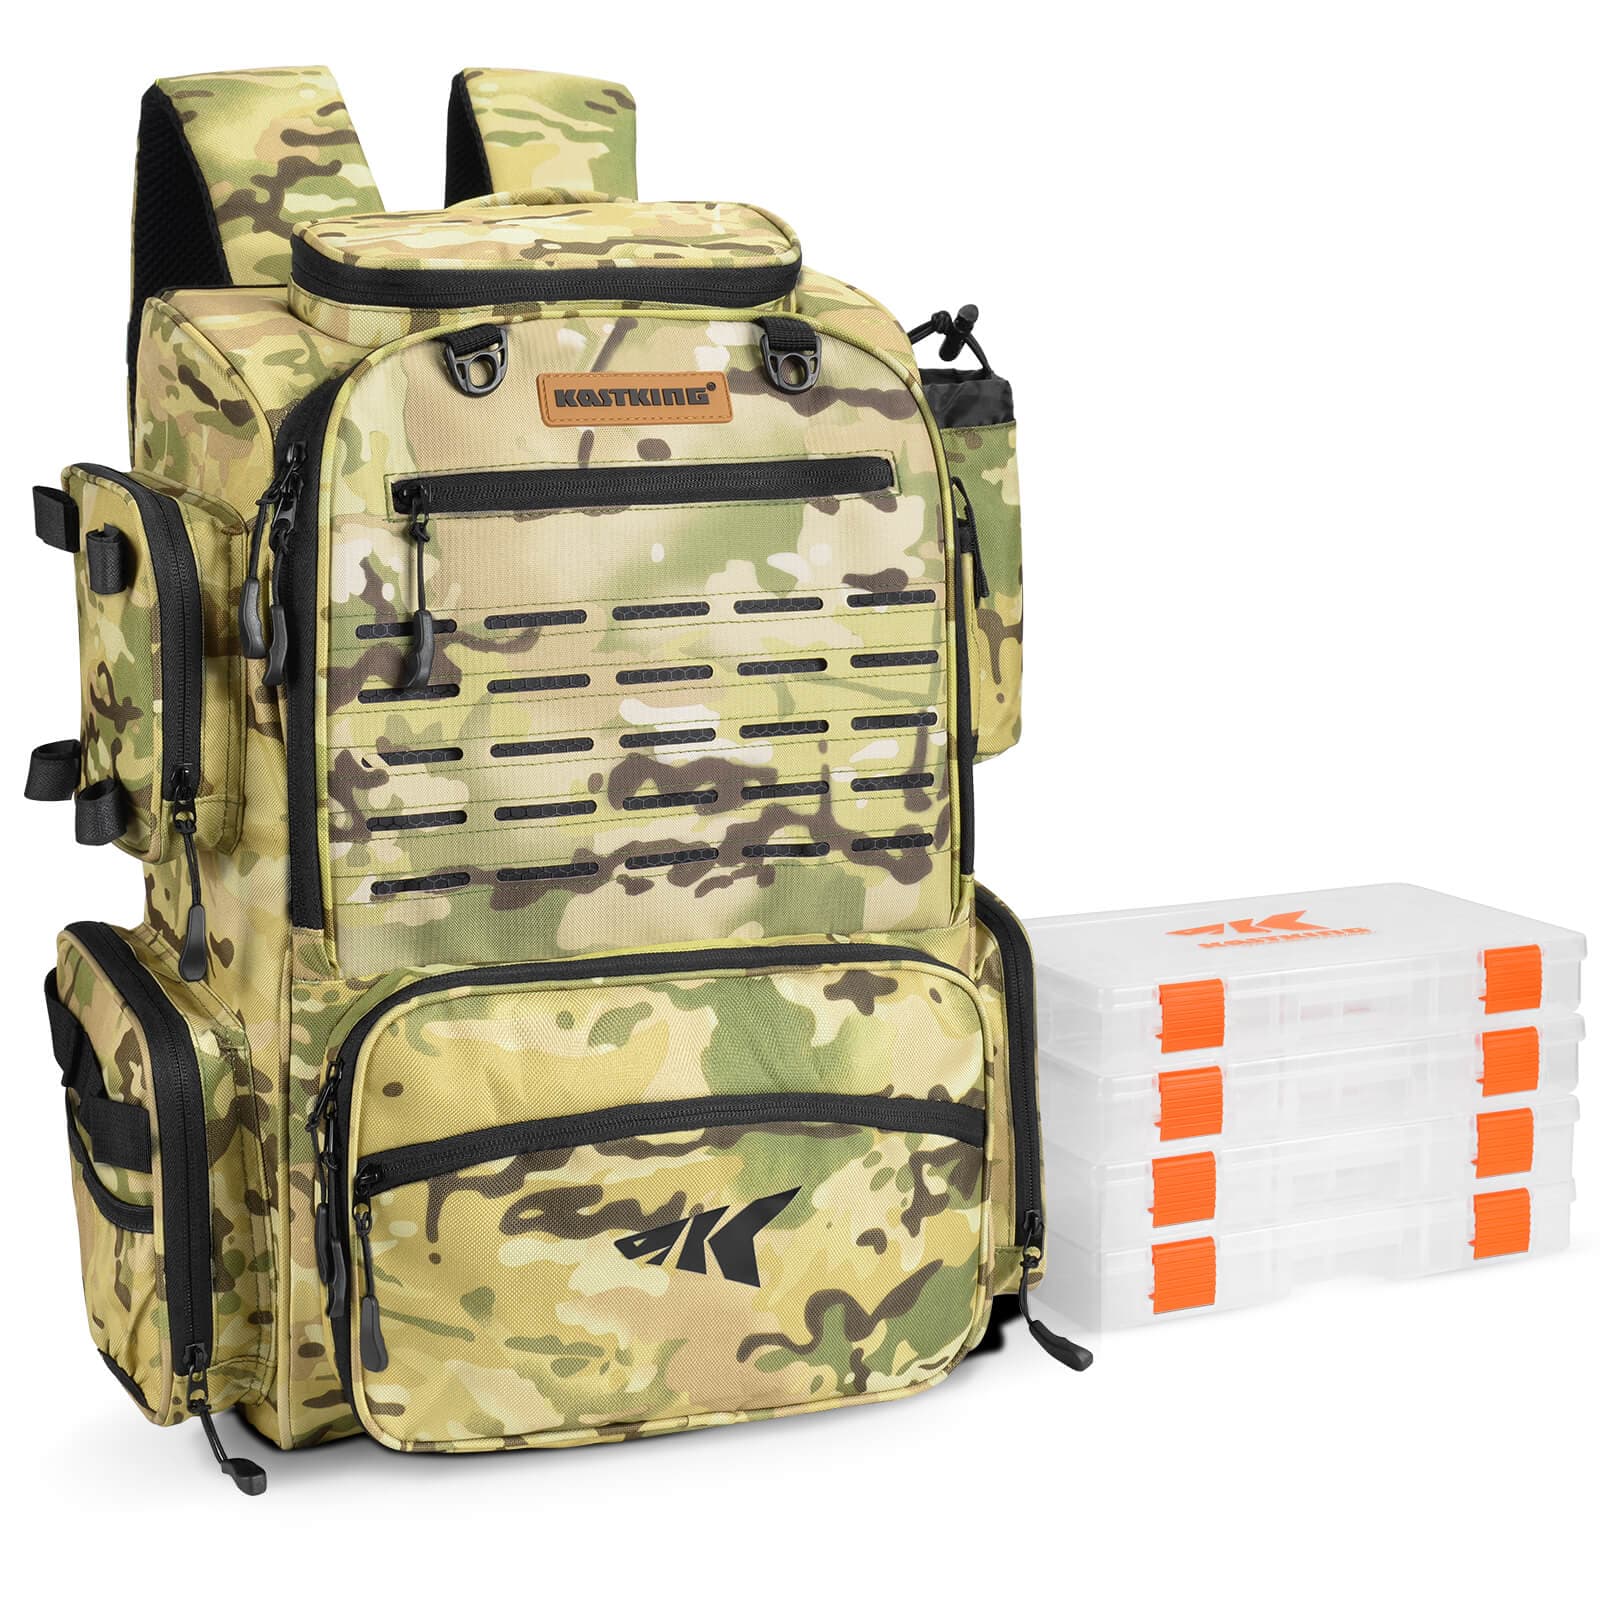 KastKing Bait Boss Lure Bag Utility Binder Tackle Bag - Soft Fishing Gear  Bag, Self-Healing Zippers & Padded Handle Design